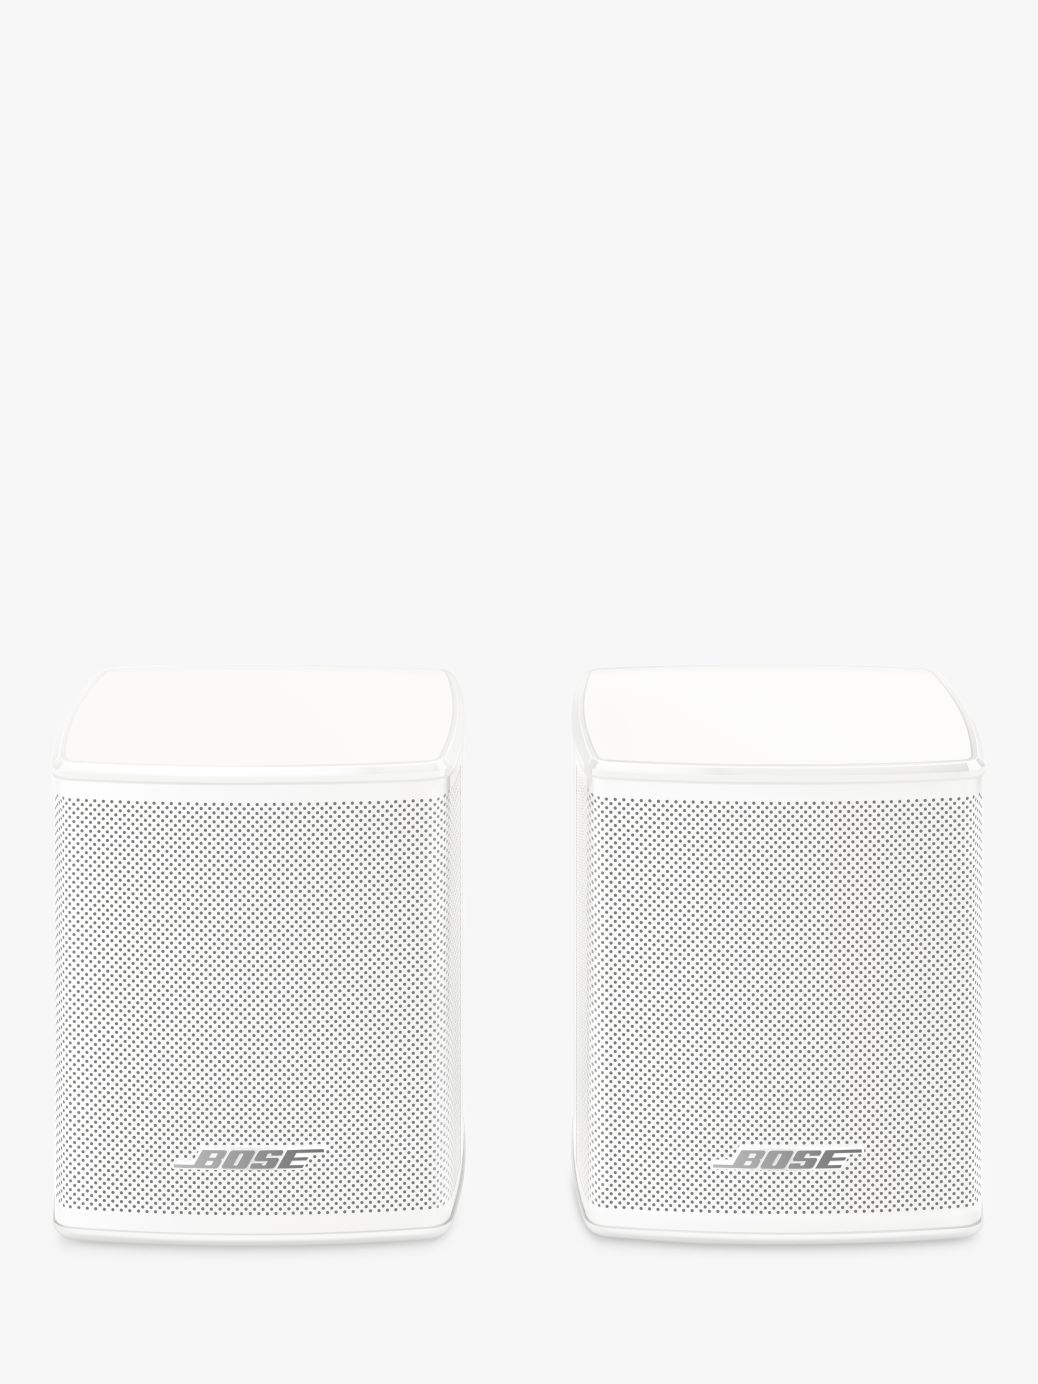 640px x 853px - Bose Surround Speakers, White